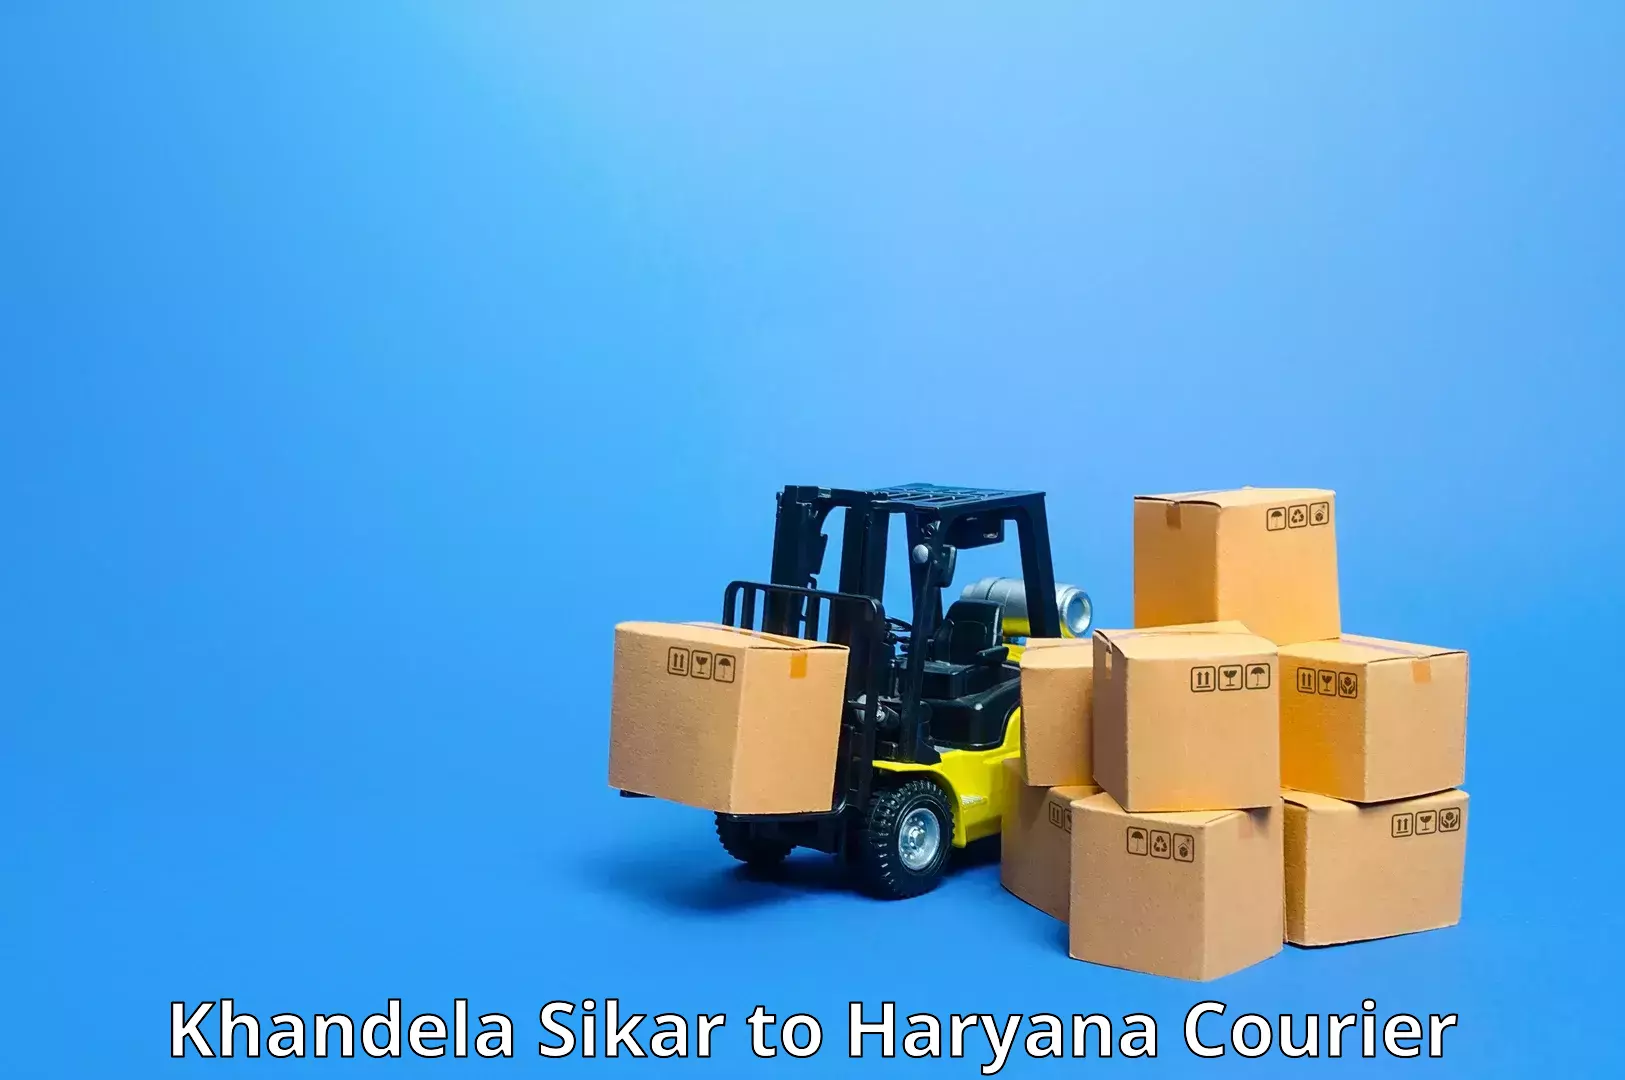 Courier service comparison Khandela Sikar to Sohna